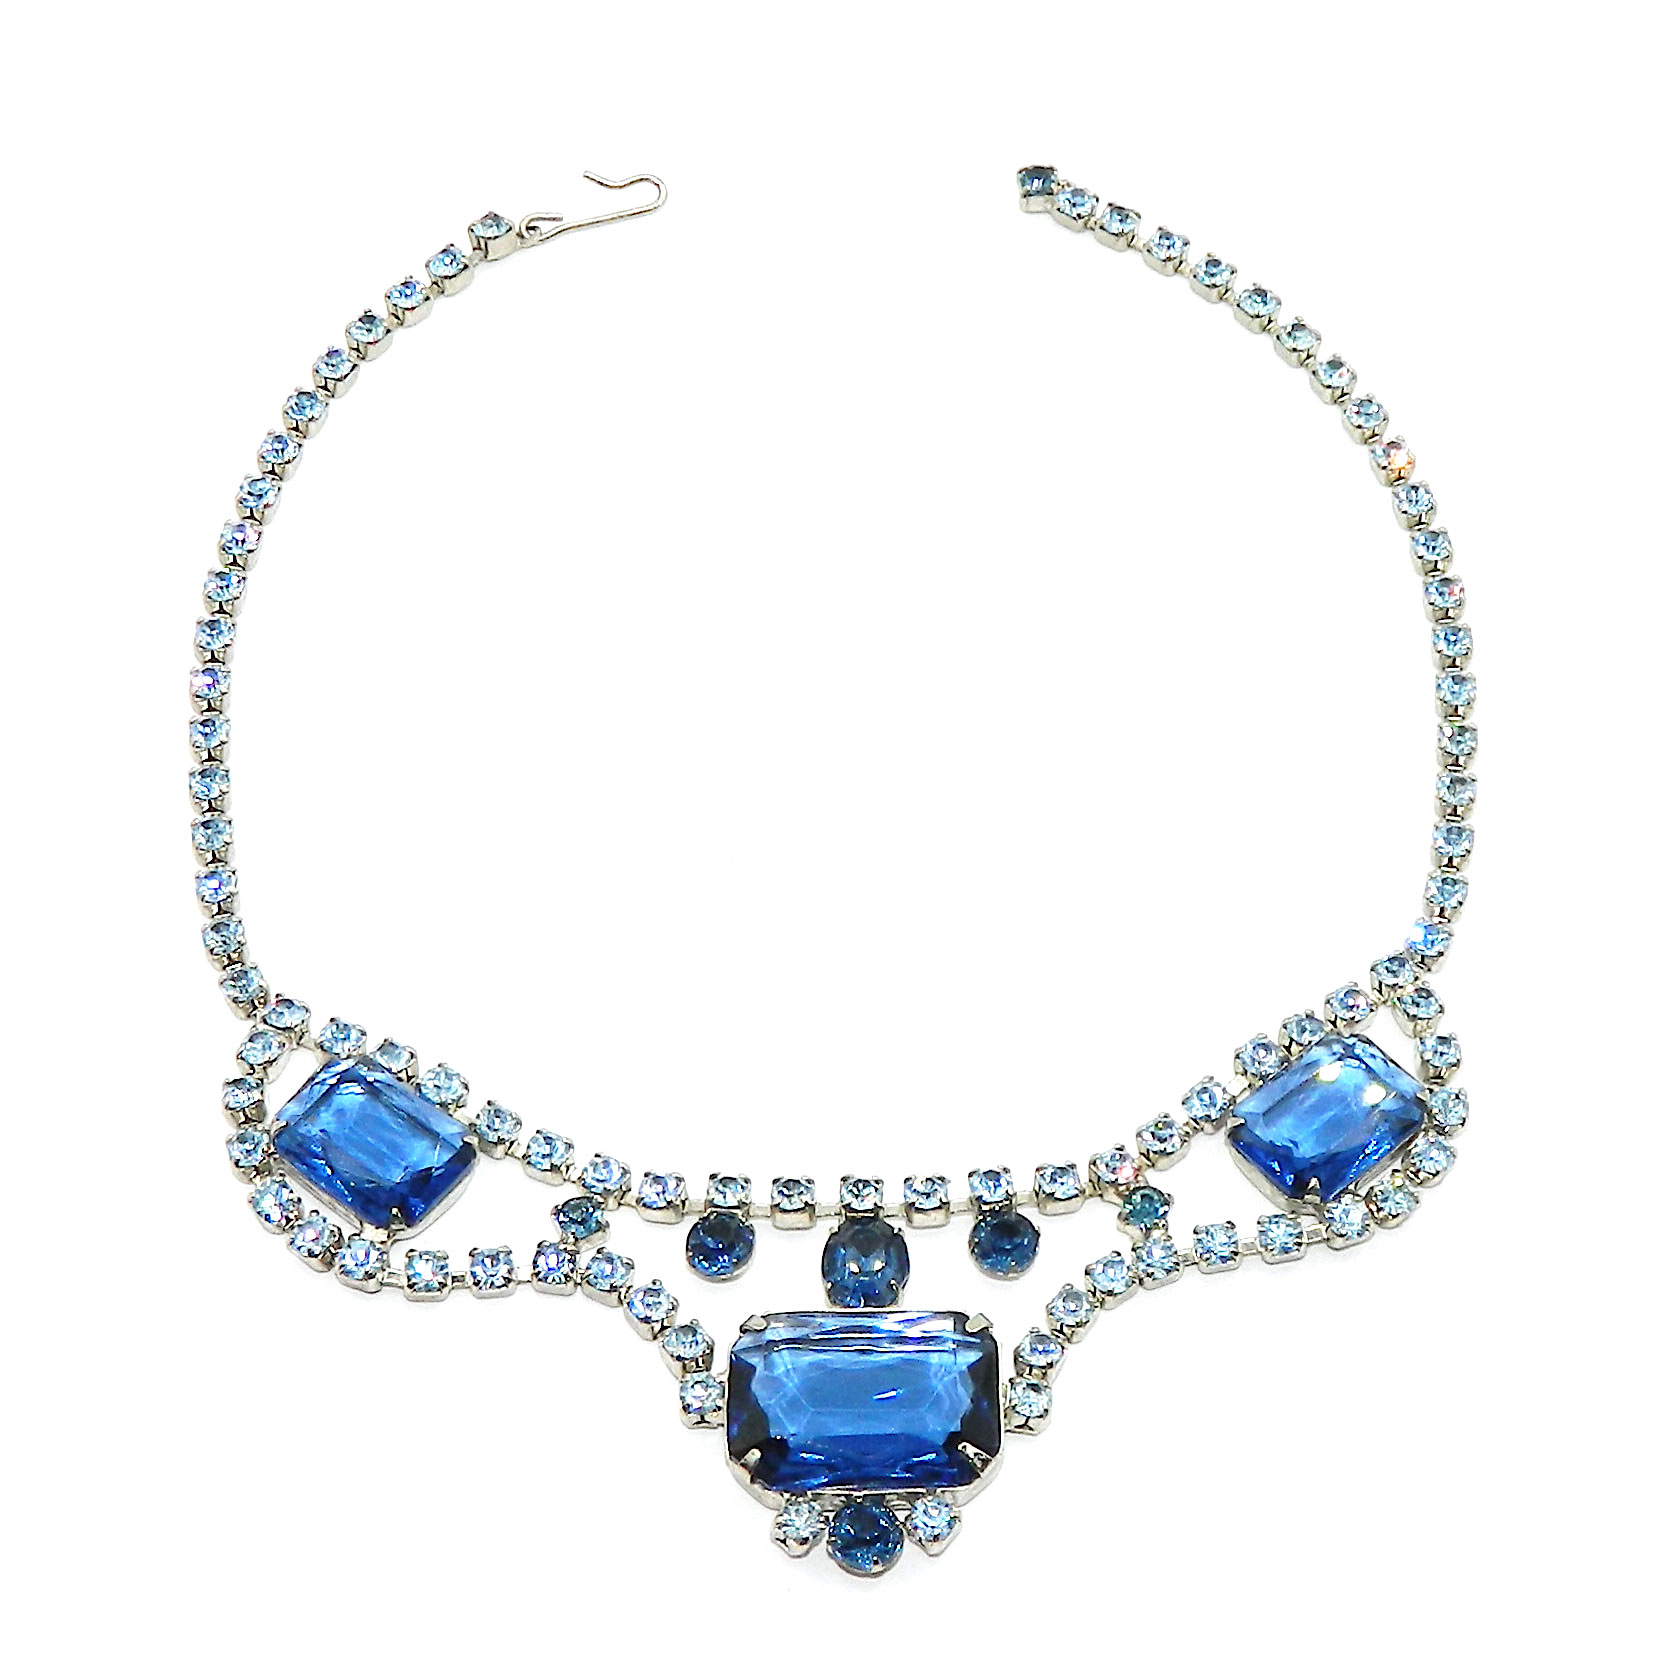 1950s blue rhinestone necklace